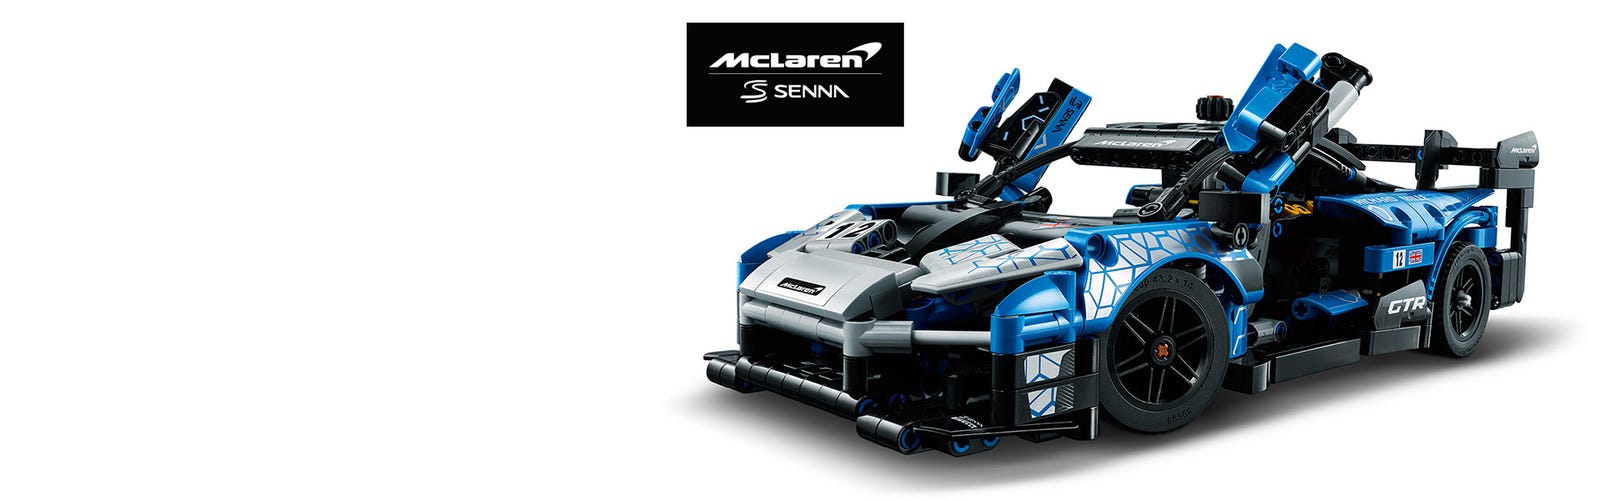 Behold: it's a full-size Lego McLaren Senna!